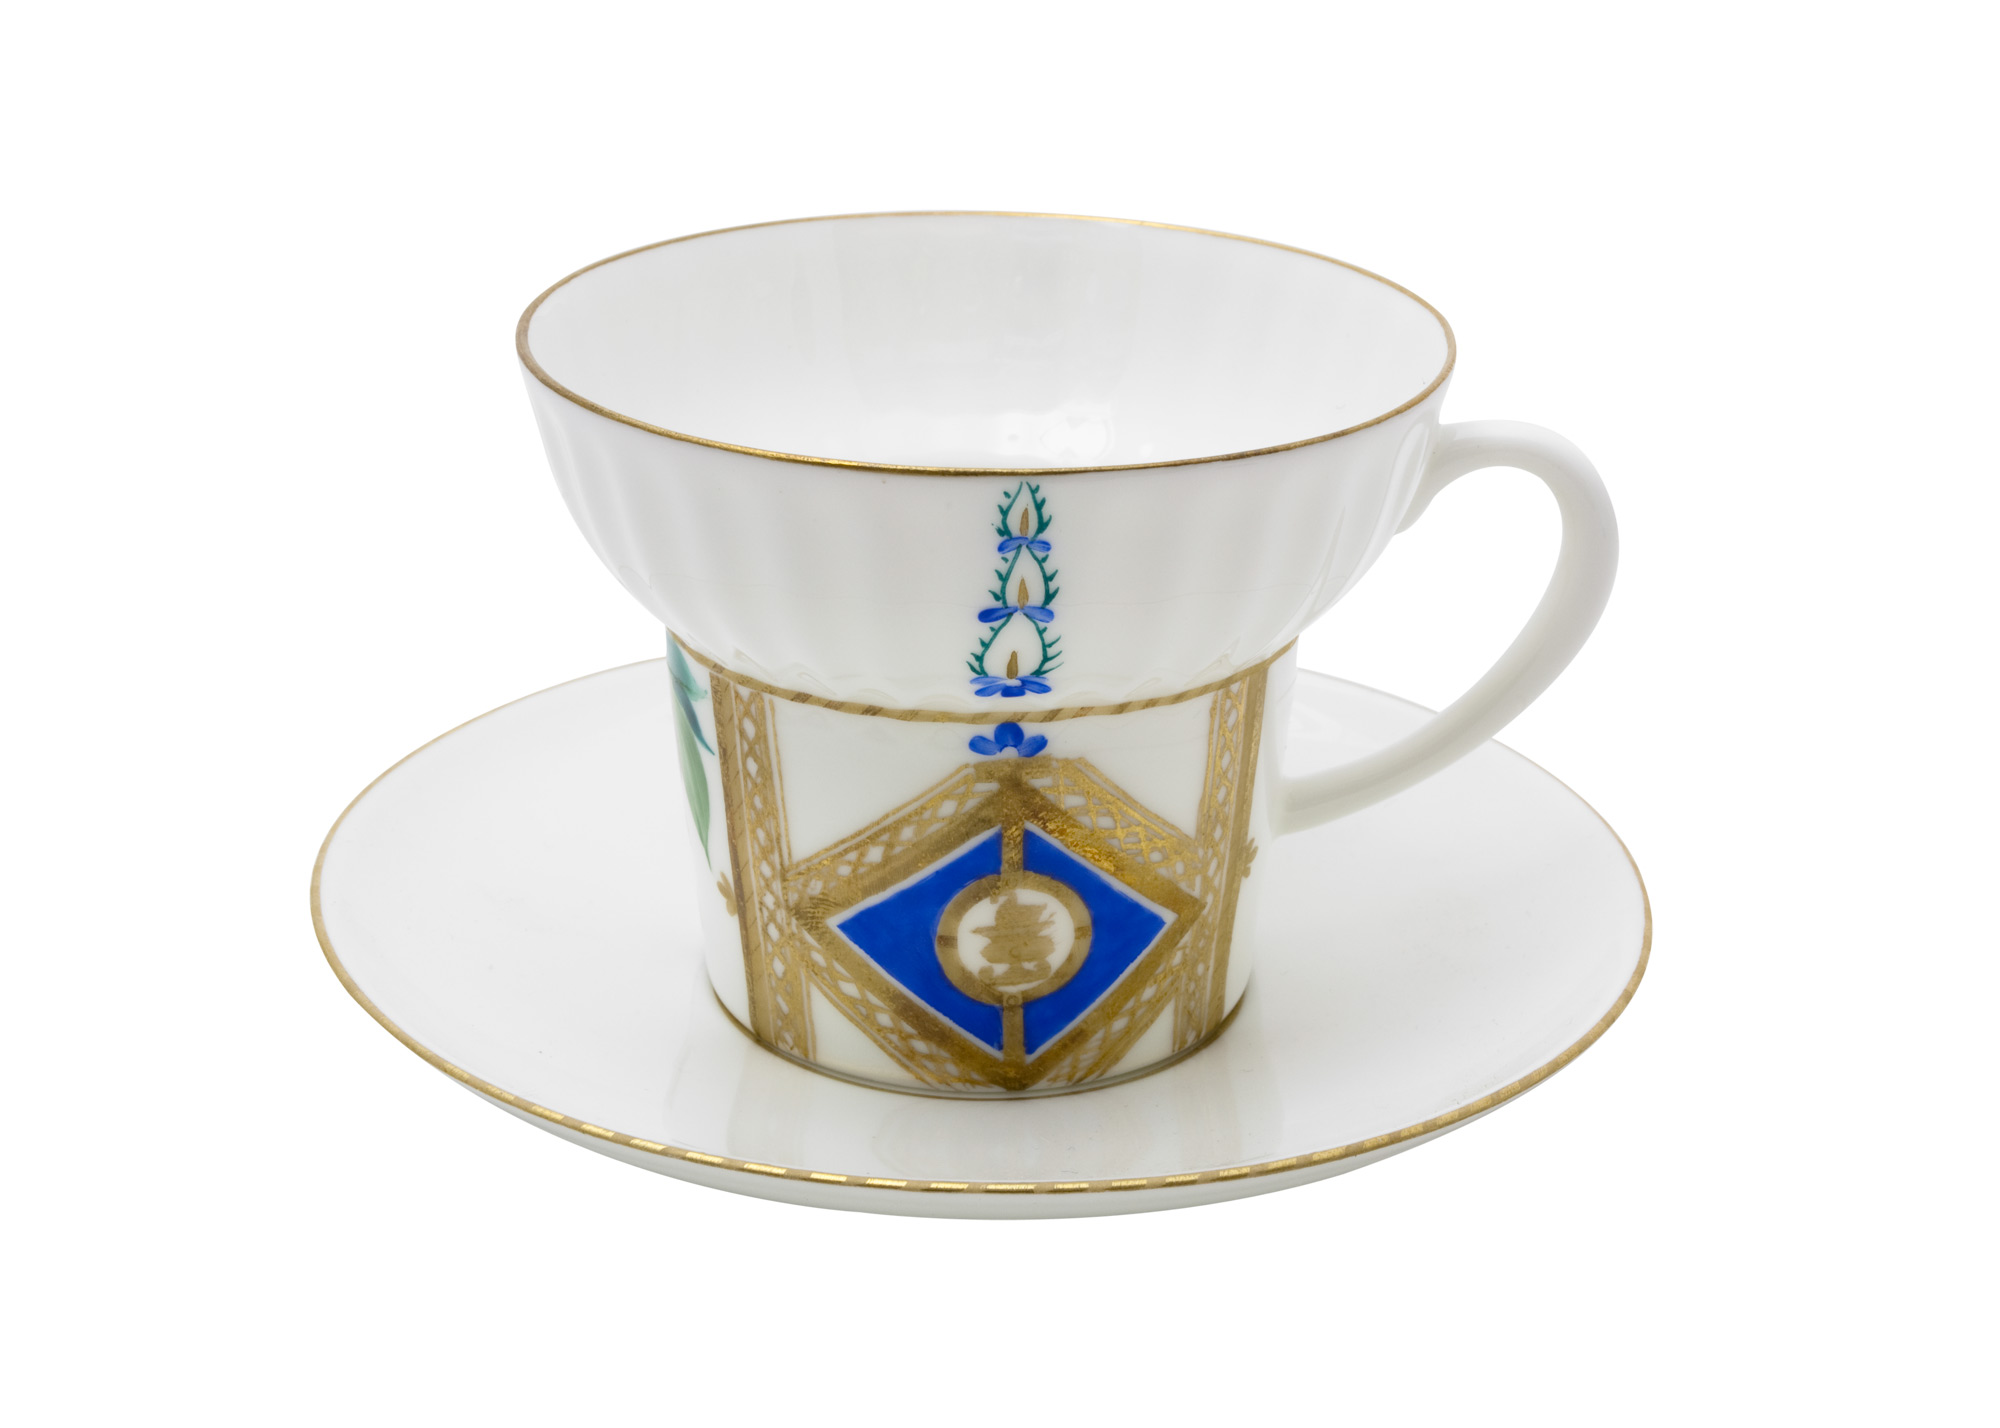 Buy Grant Tea Cup and Saucer at GoldenCockerel.com